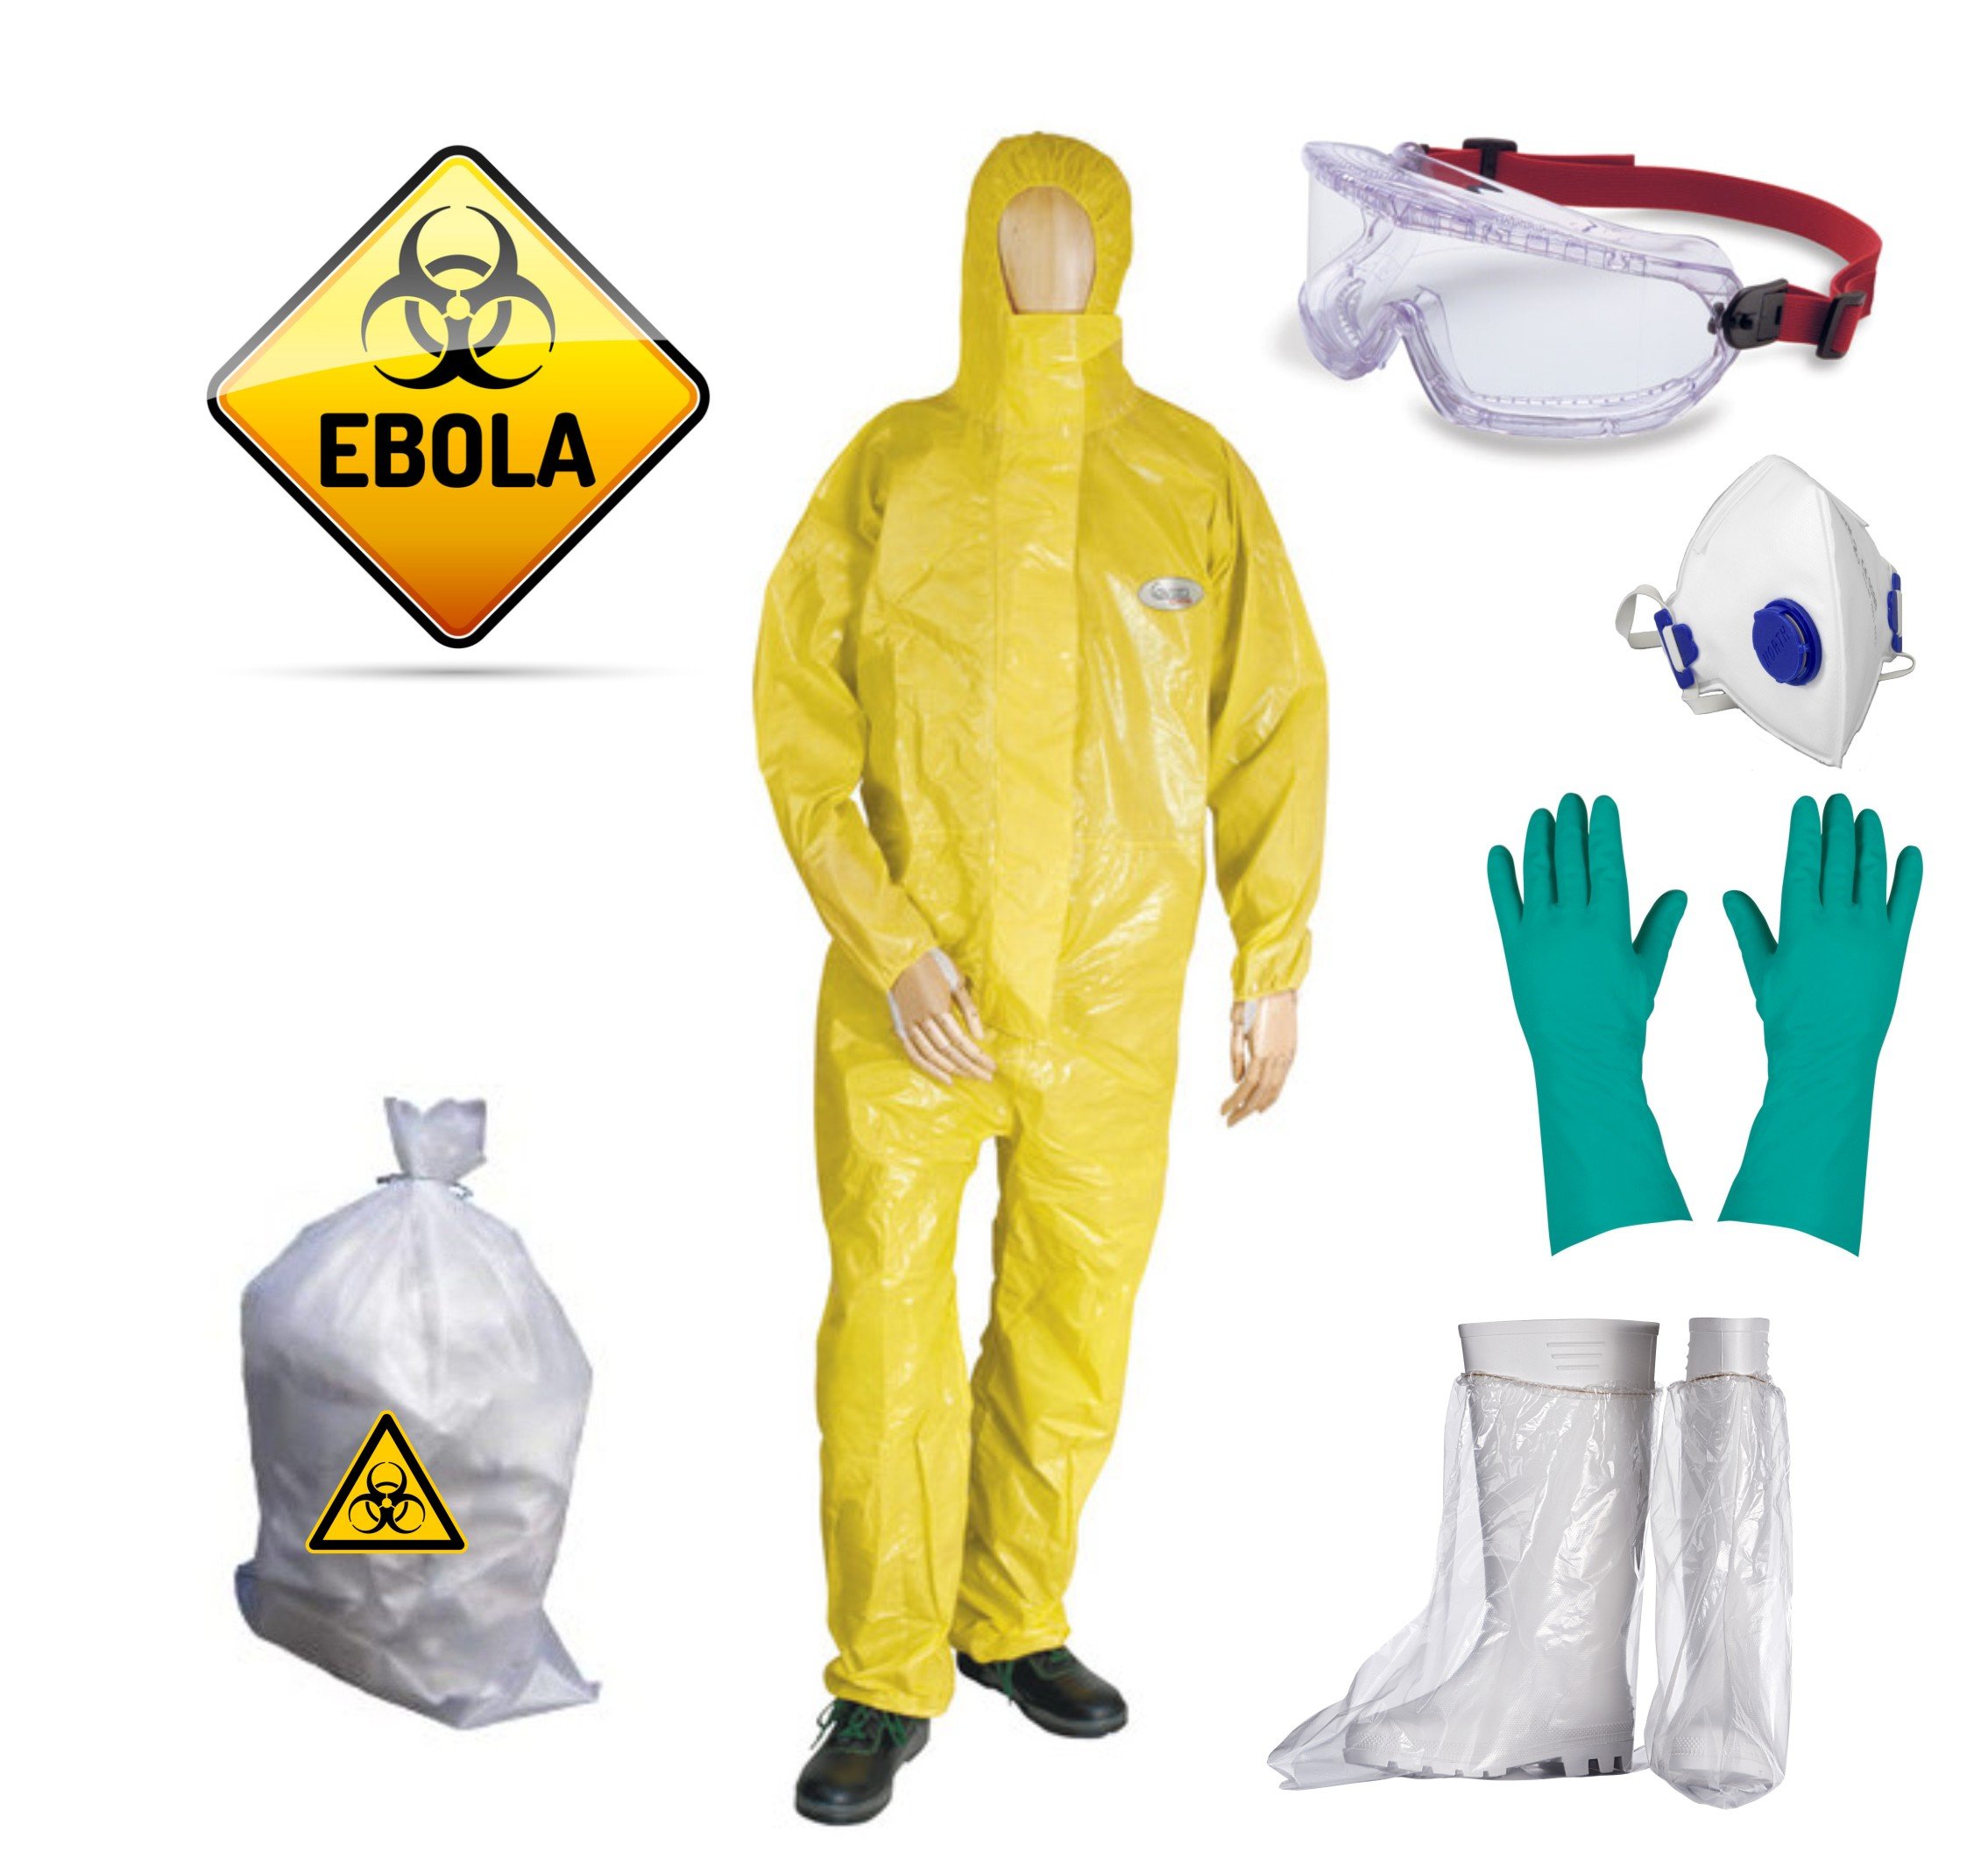 MeierMed Infektionsschutz Set - Ebola Schutz-Set - Professional